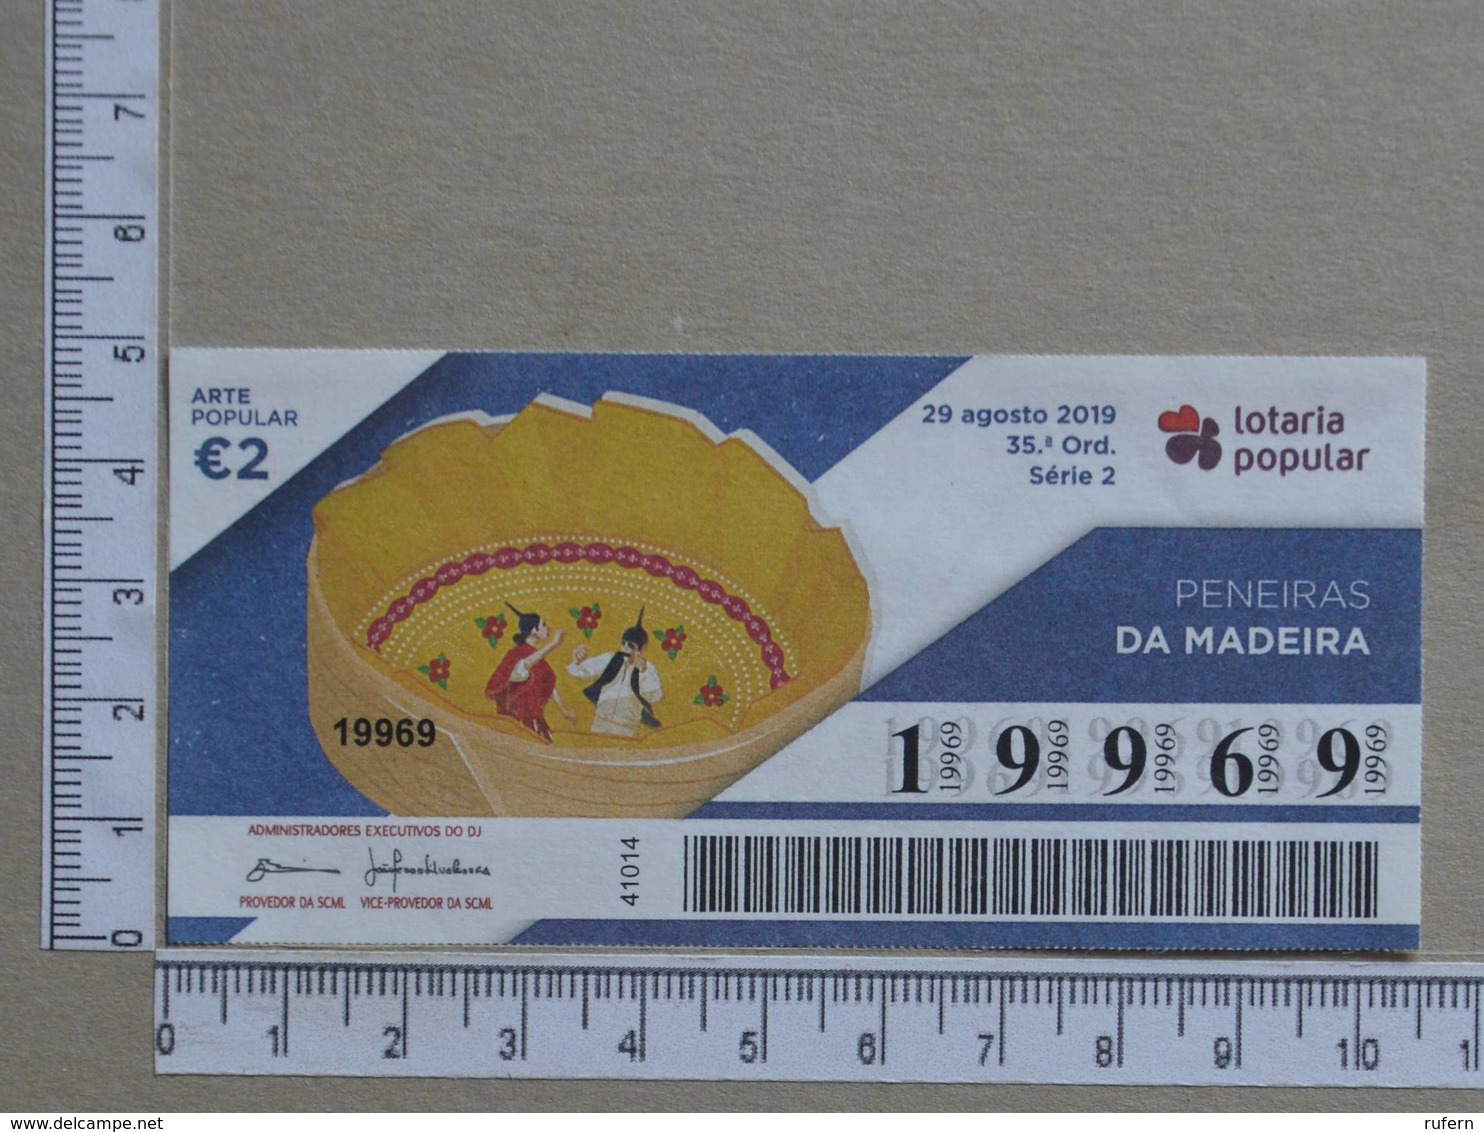 PORTUGAL - 2019 - LOTARIA POPULAR -  35ª -  2 SCANS   (Nº35842) - Lottery Tickets